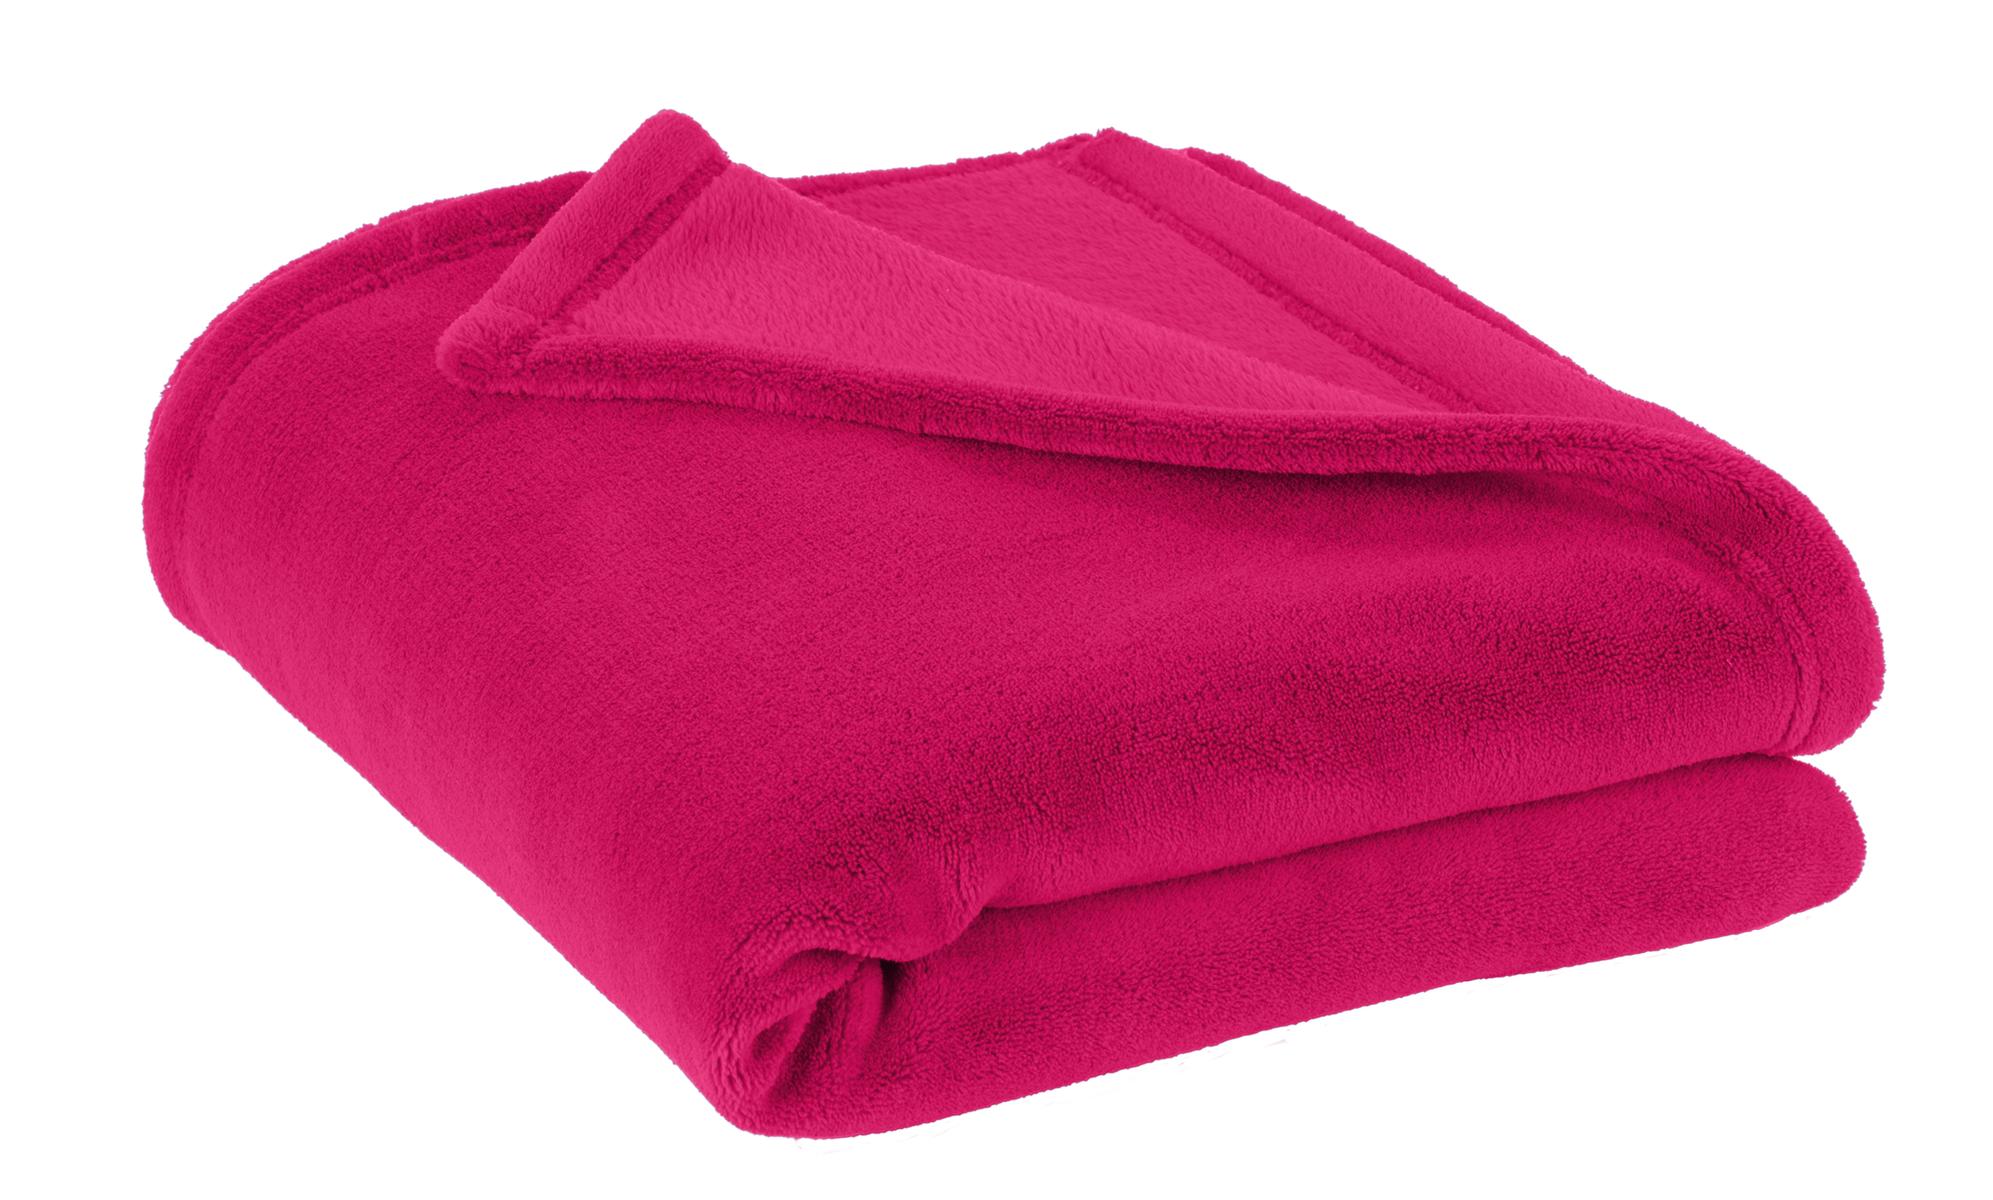 Warm Blanket Clipart Bp30 Charitypink Folded 071312 Jpg